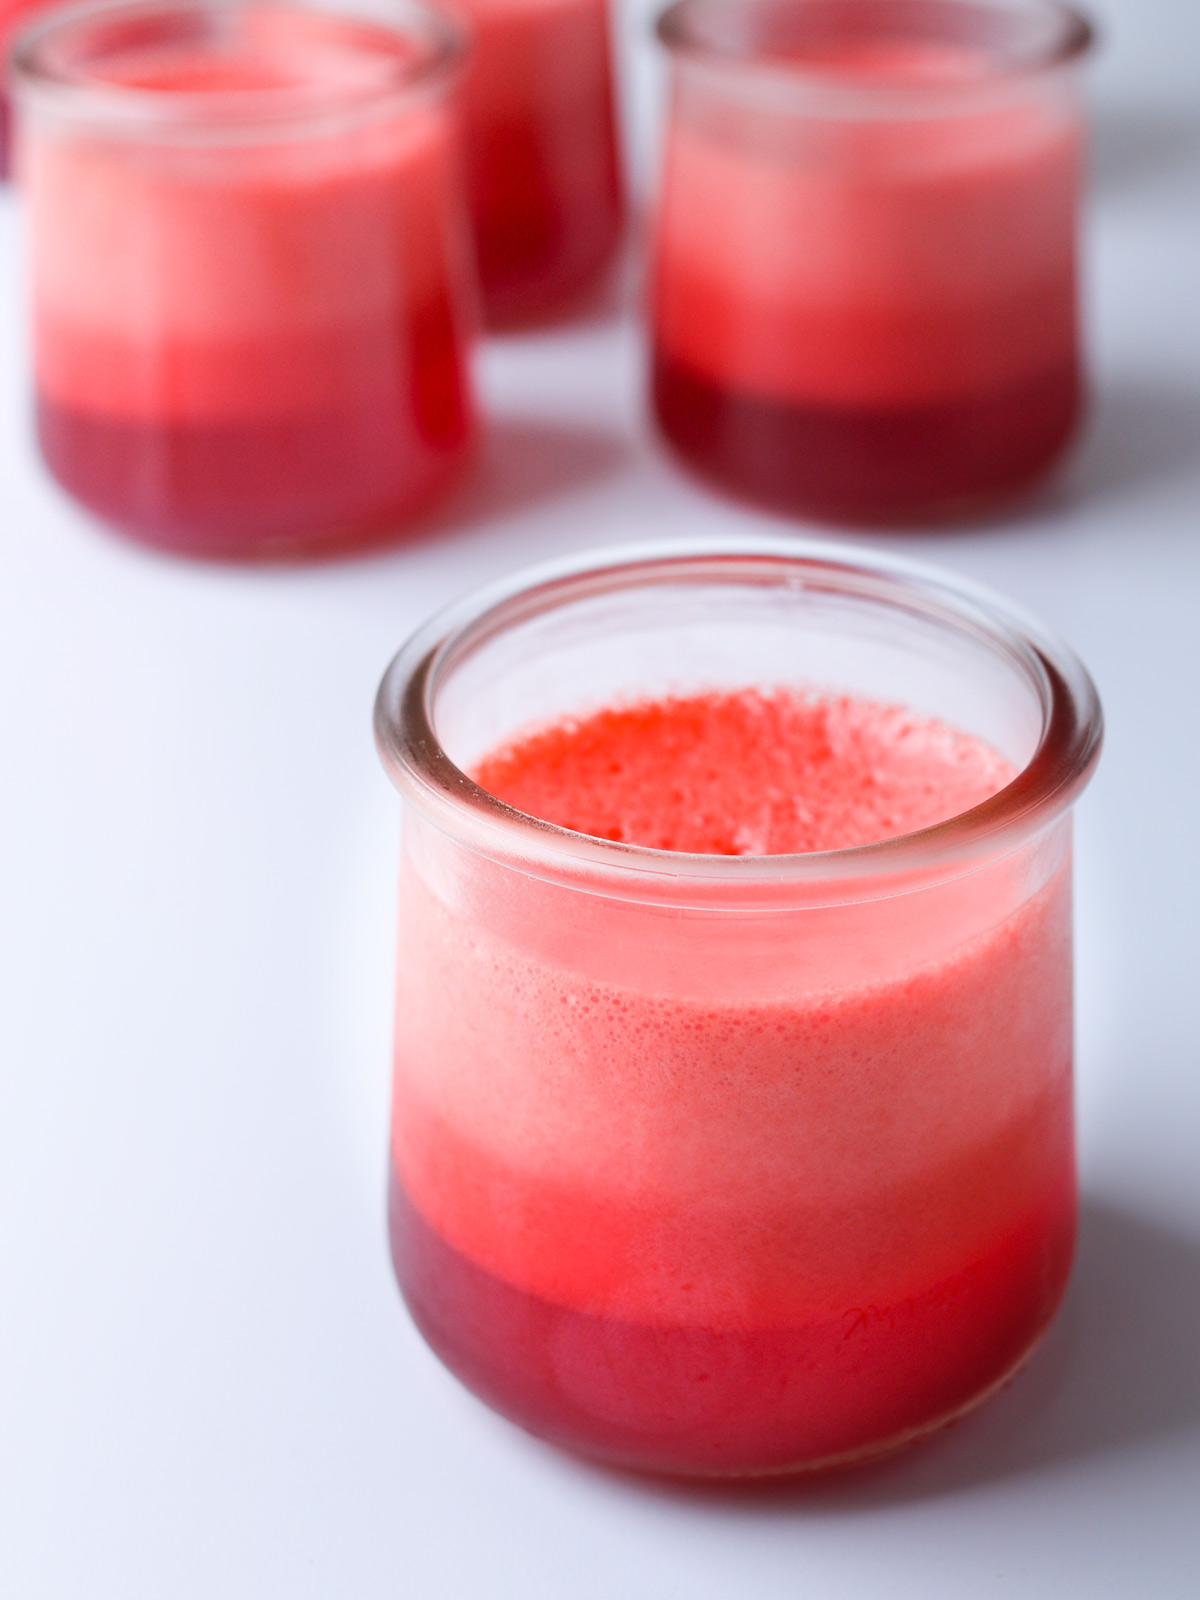 glasses with jello 123 dessert in raspberry flavor on white table.